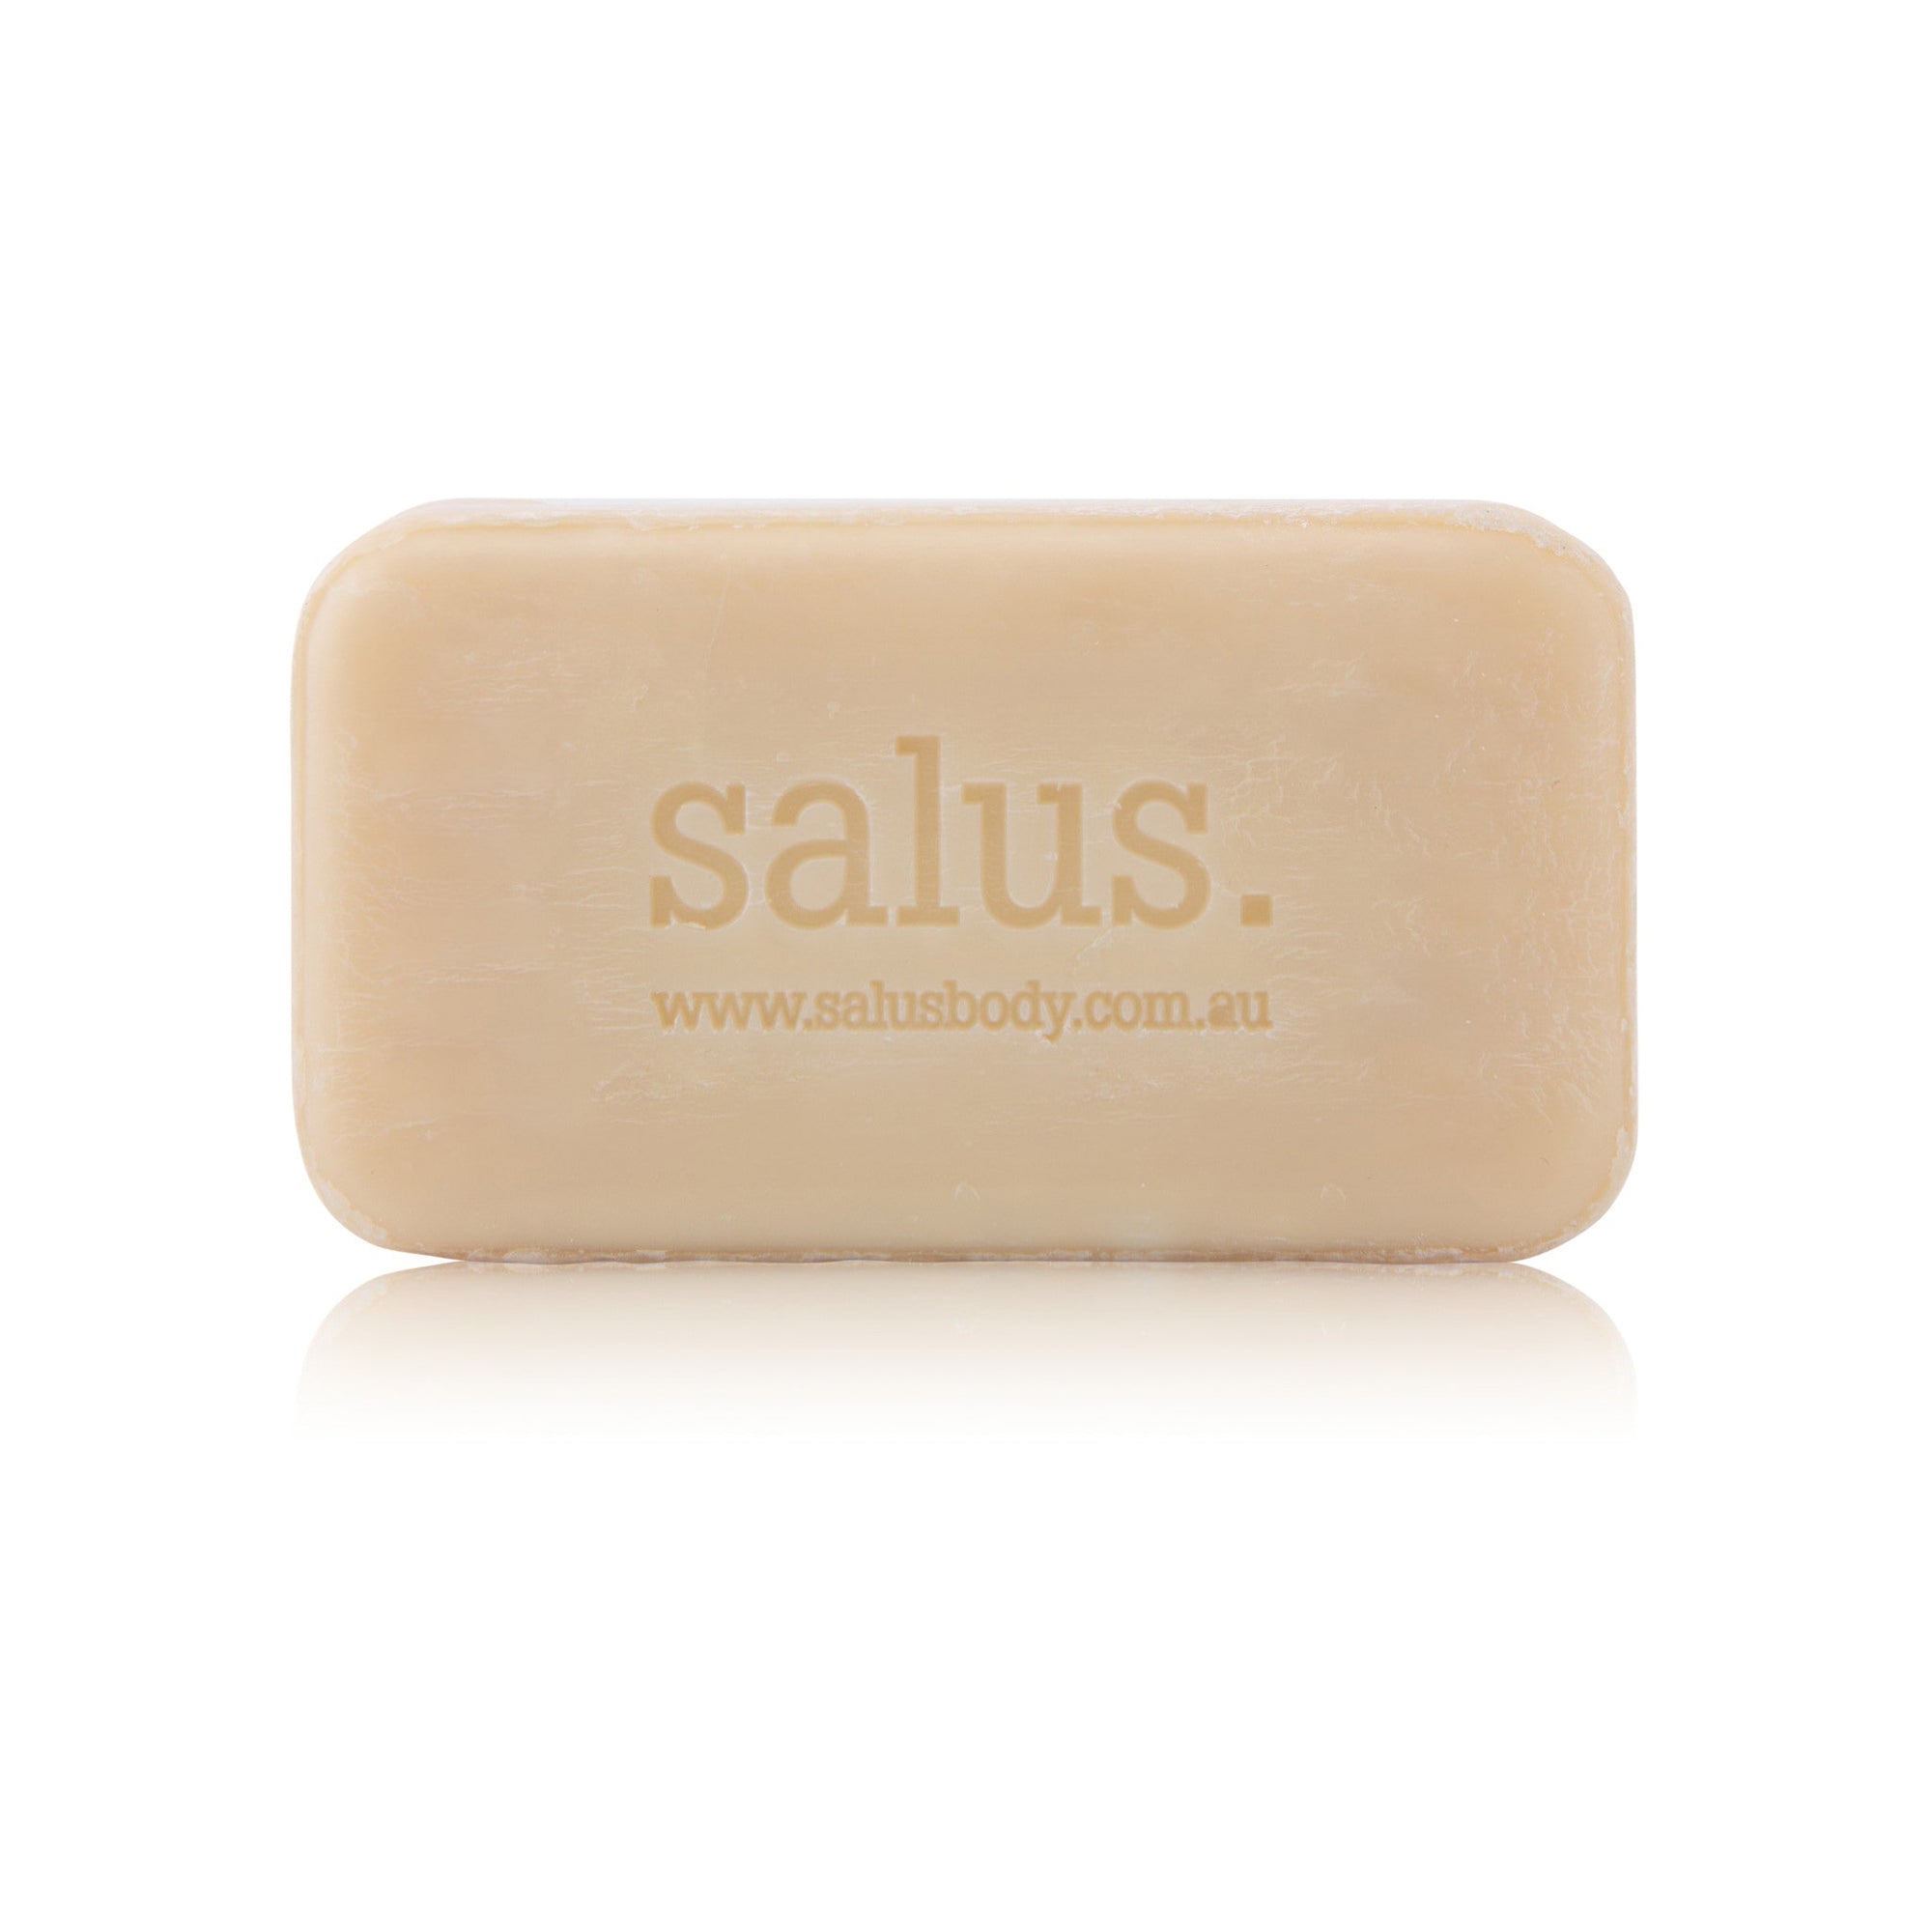 Salus Soap Bar - White Clay